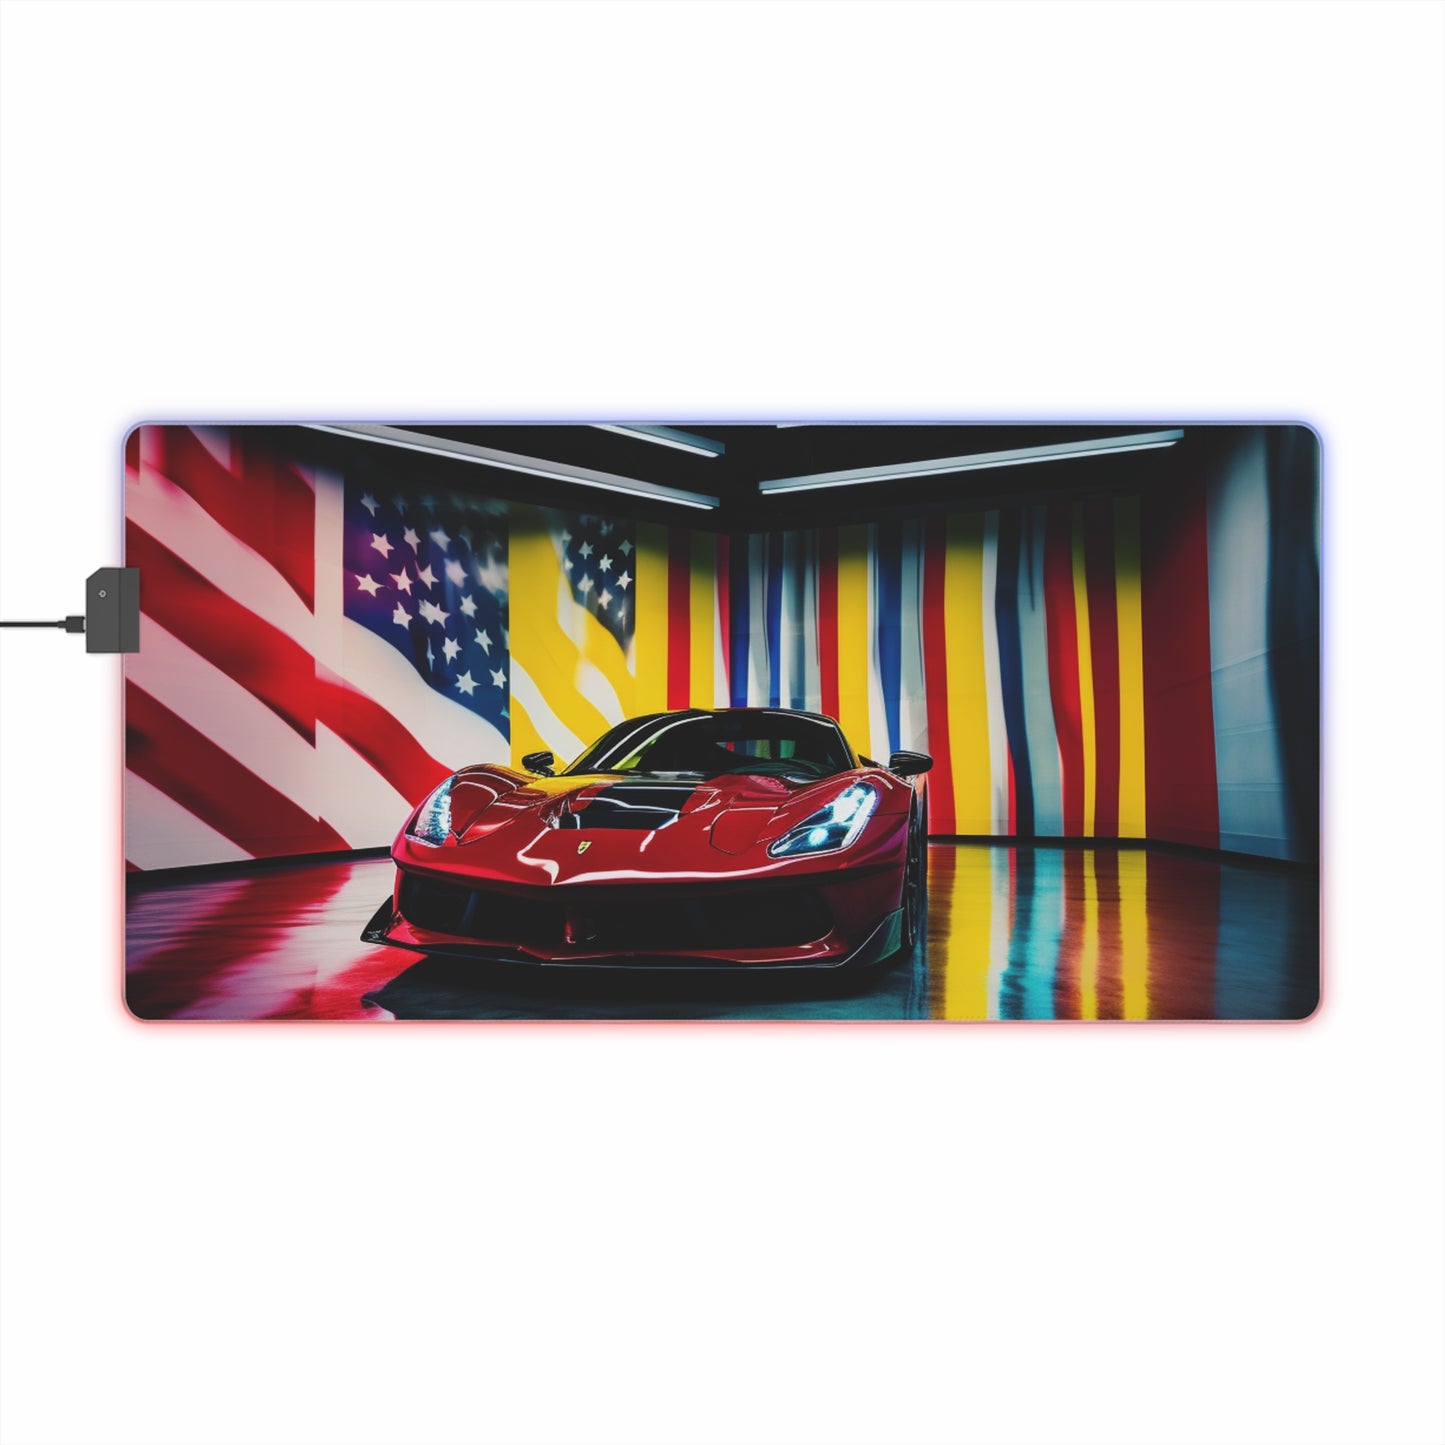 LED Gaming Mouse Pad Macro Flag Ferrari 2